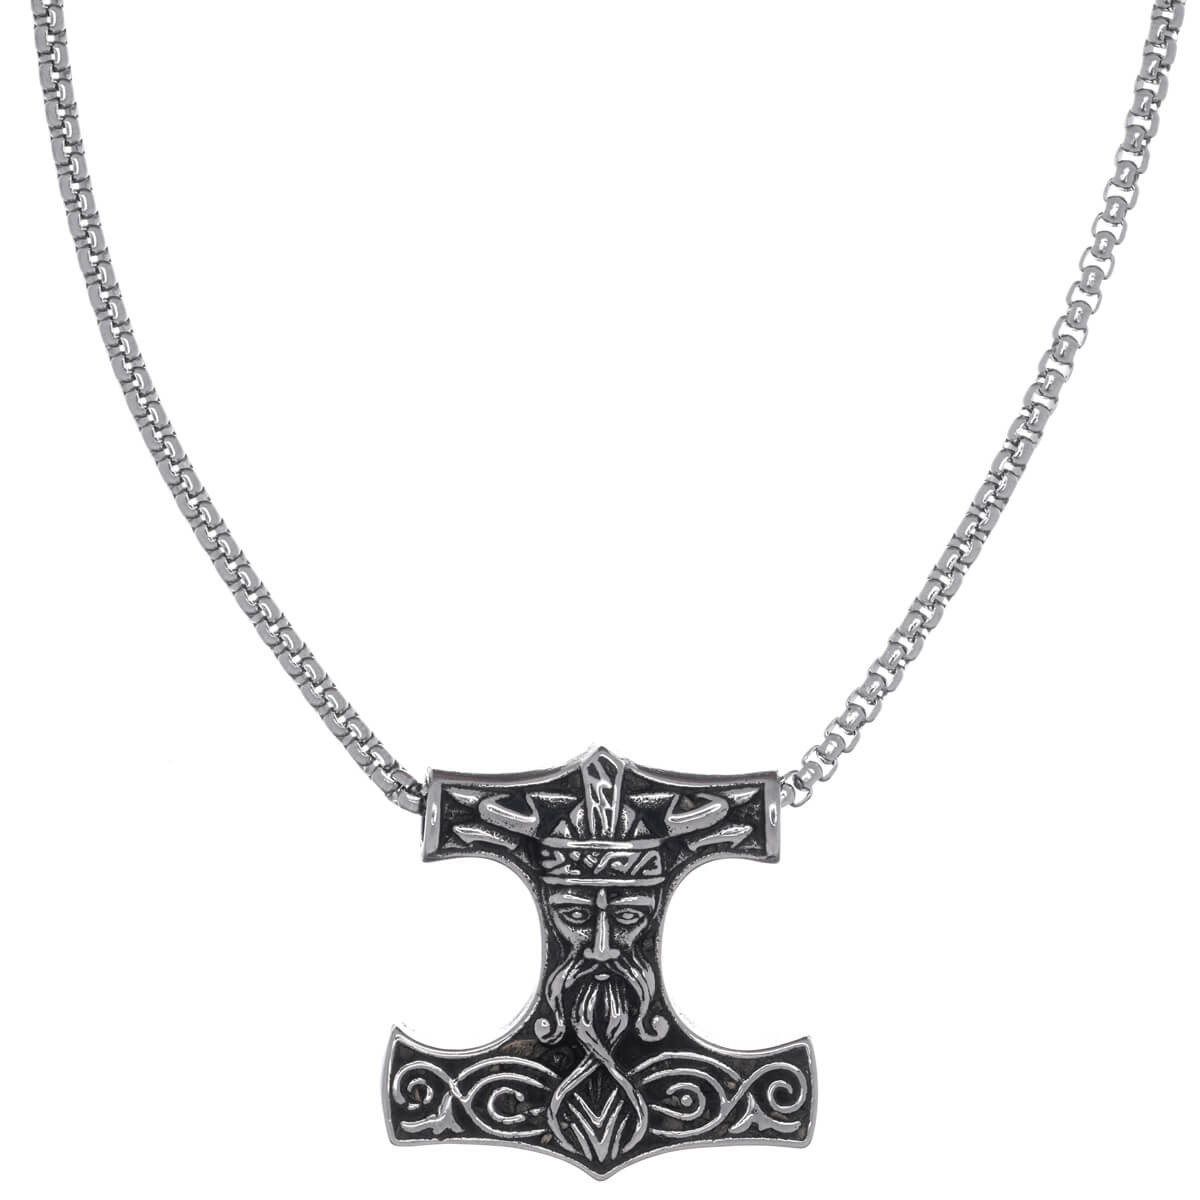 Viking themed pendant steel necklace (steel 316L)